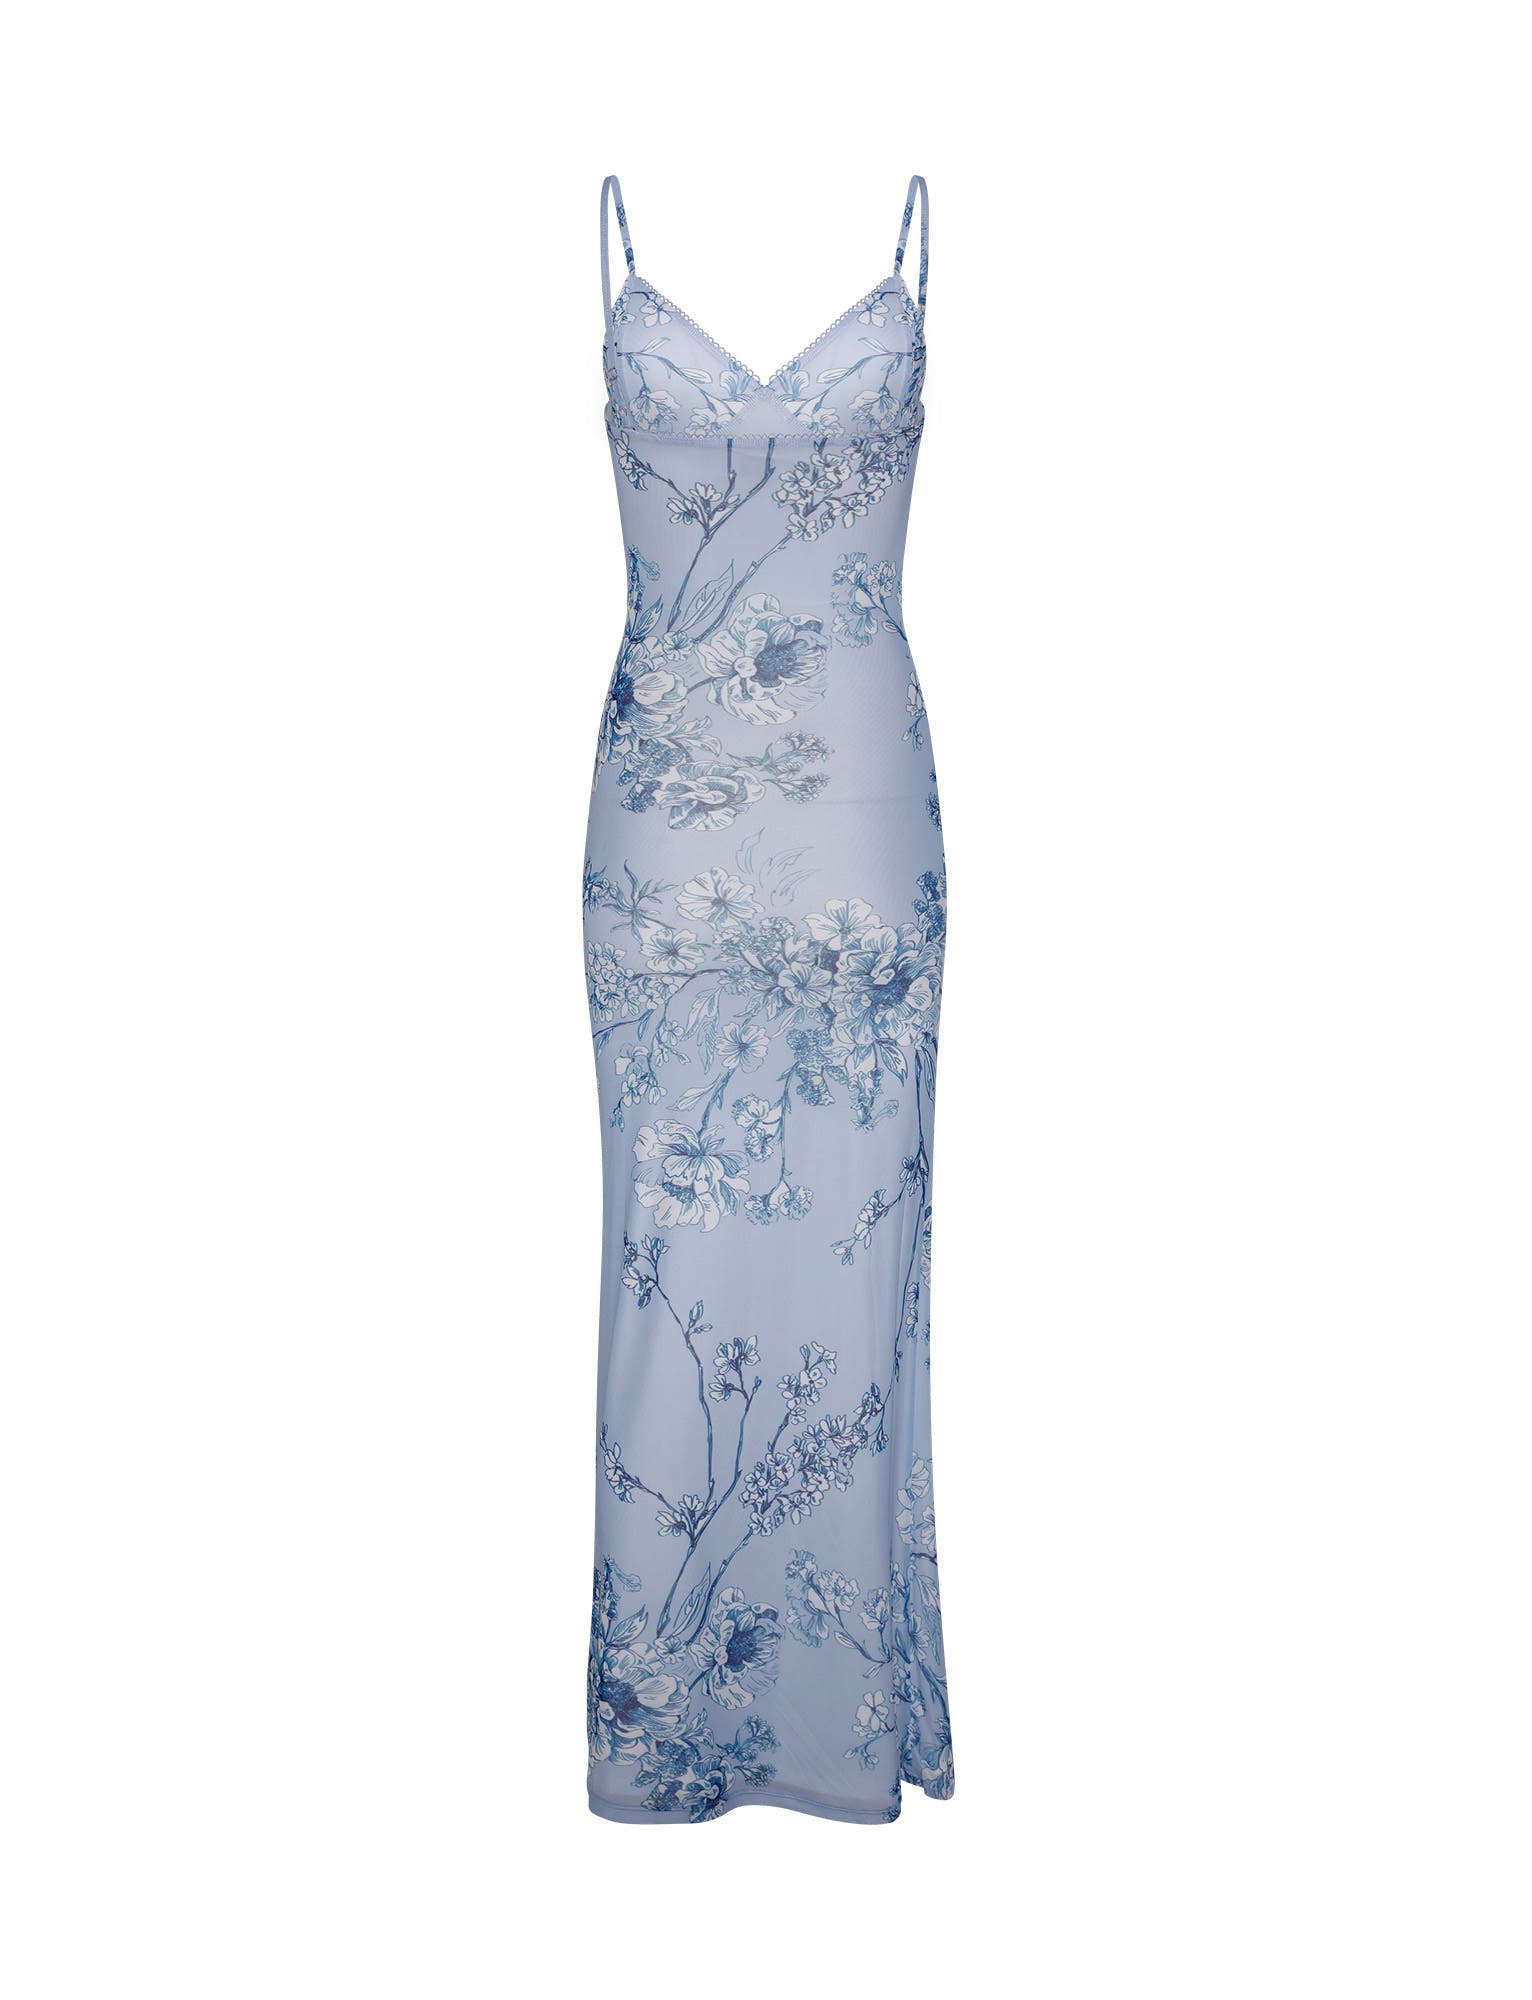 JULIANNA DRESS - BLUE : FLORAL : CERAMIC FLORAL